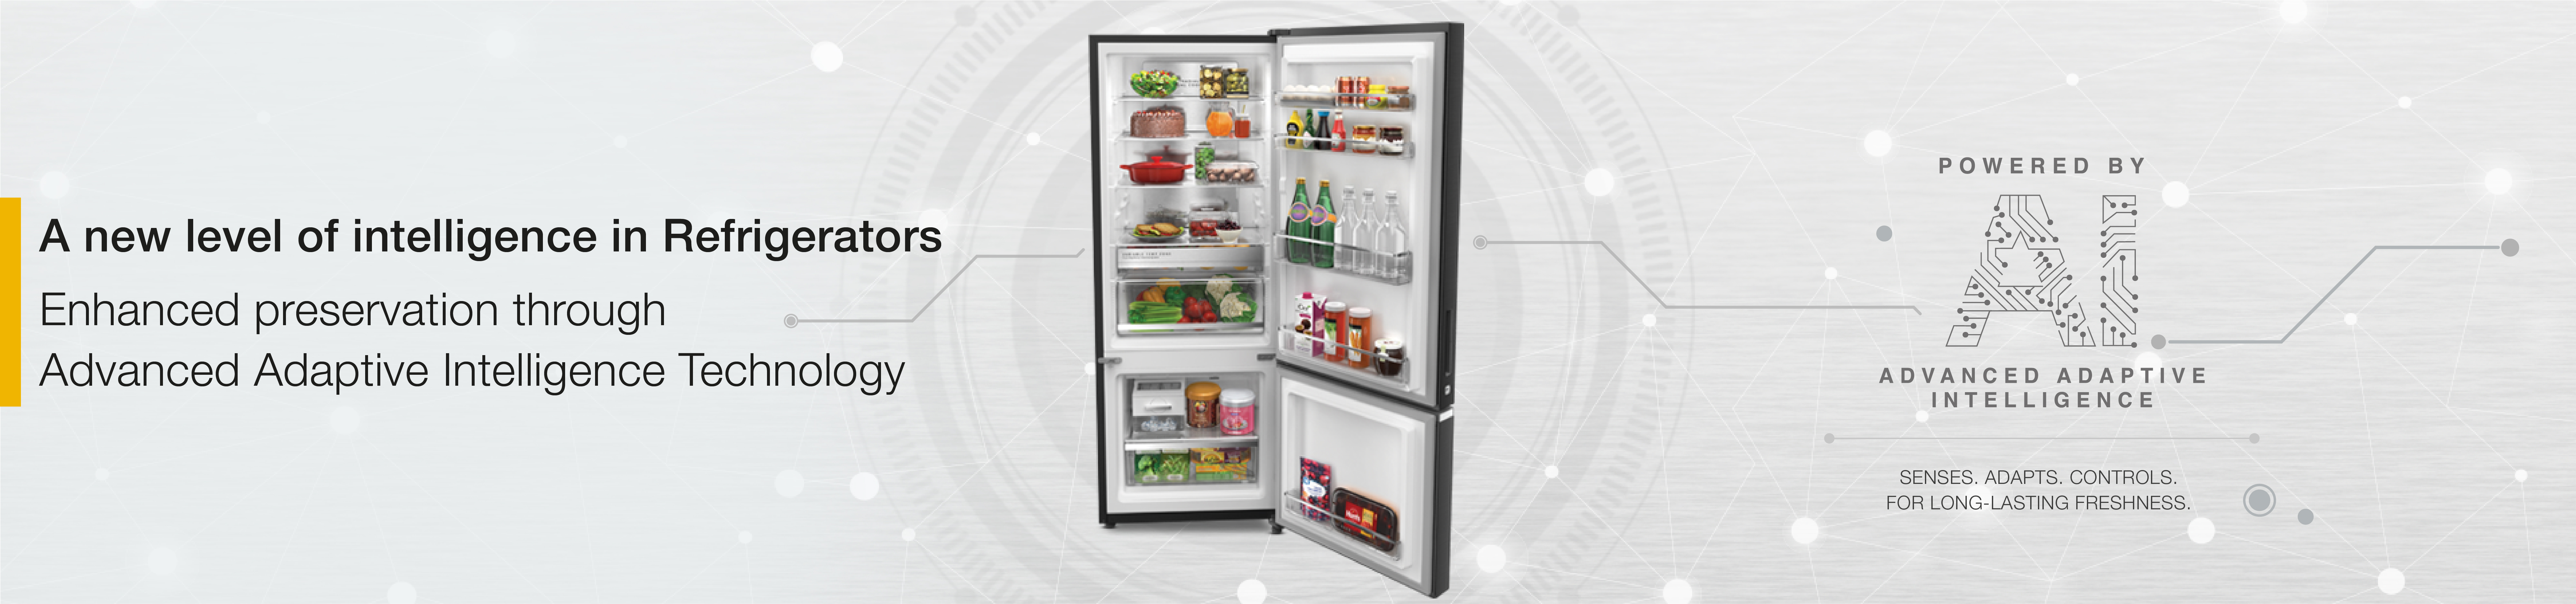 Refrigerators with AI technology